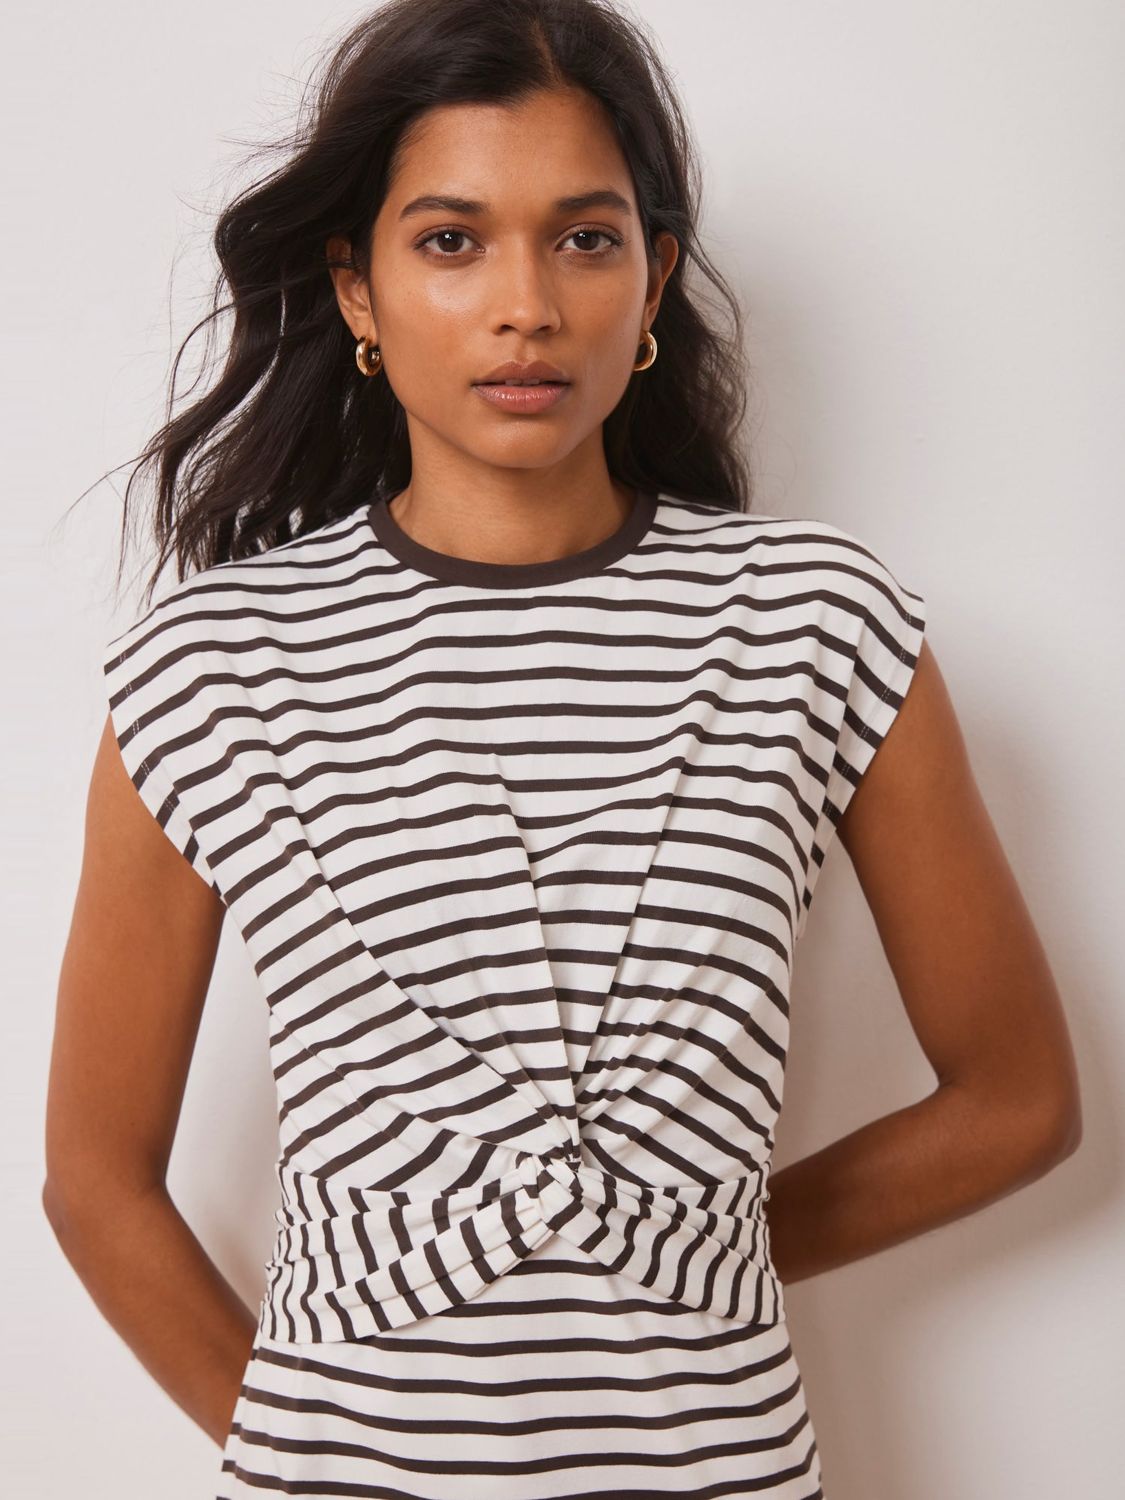 Mint Velvet Stripe Twist Detail Midi Dress, Dark Brown/White, XS